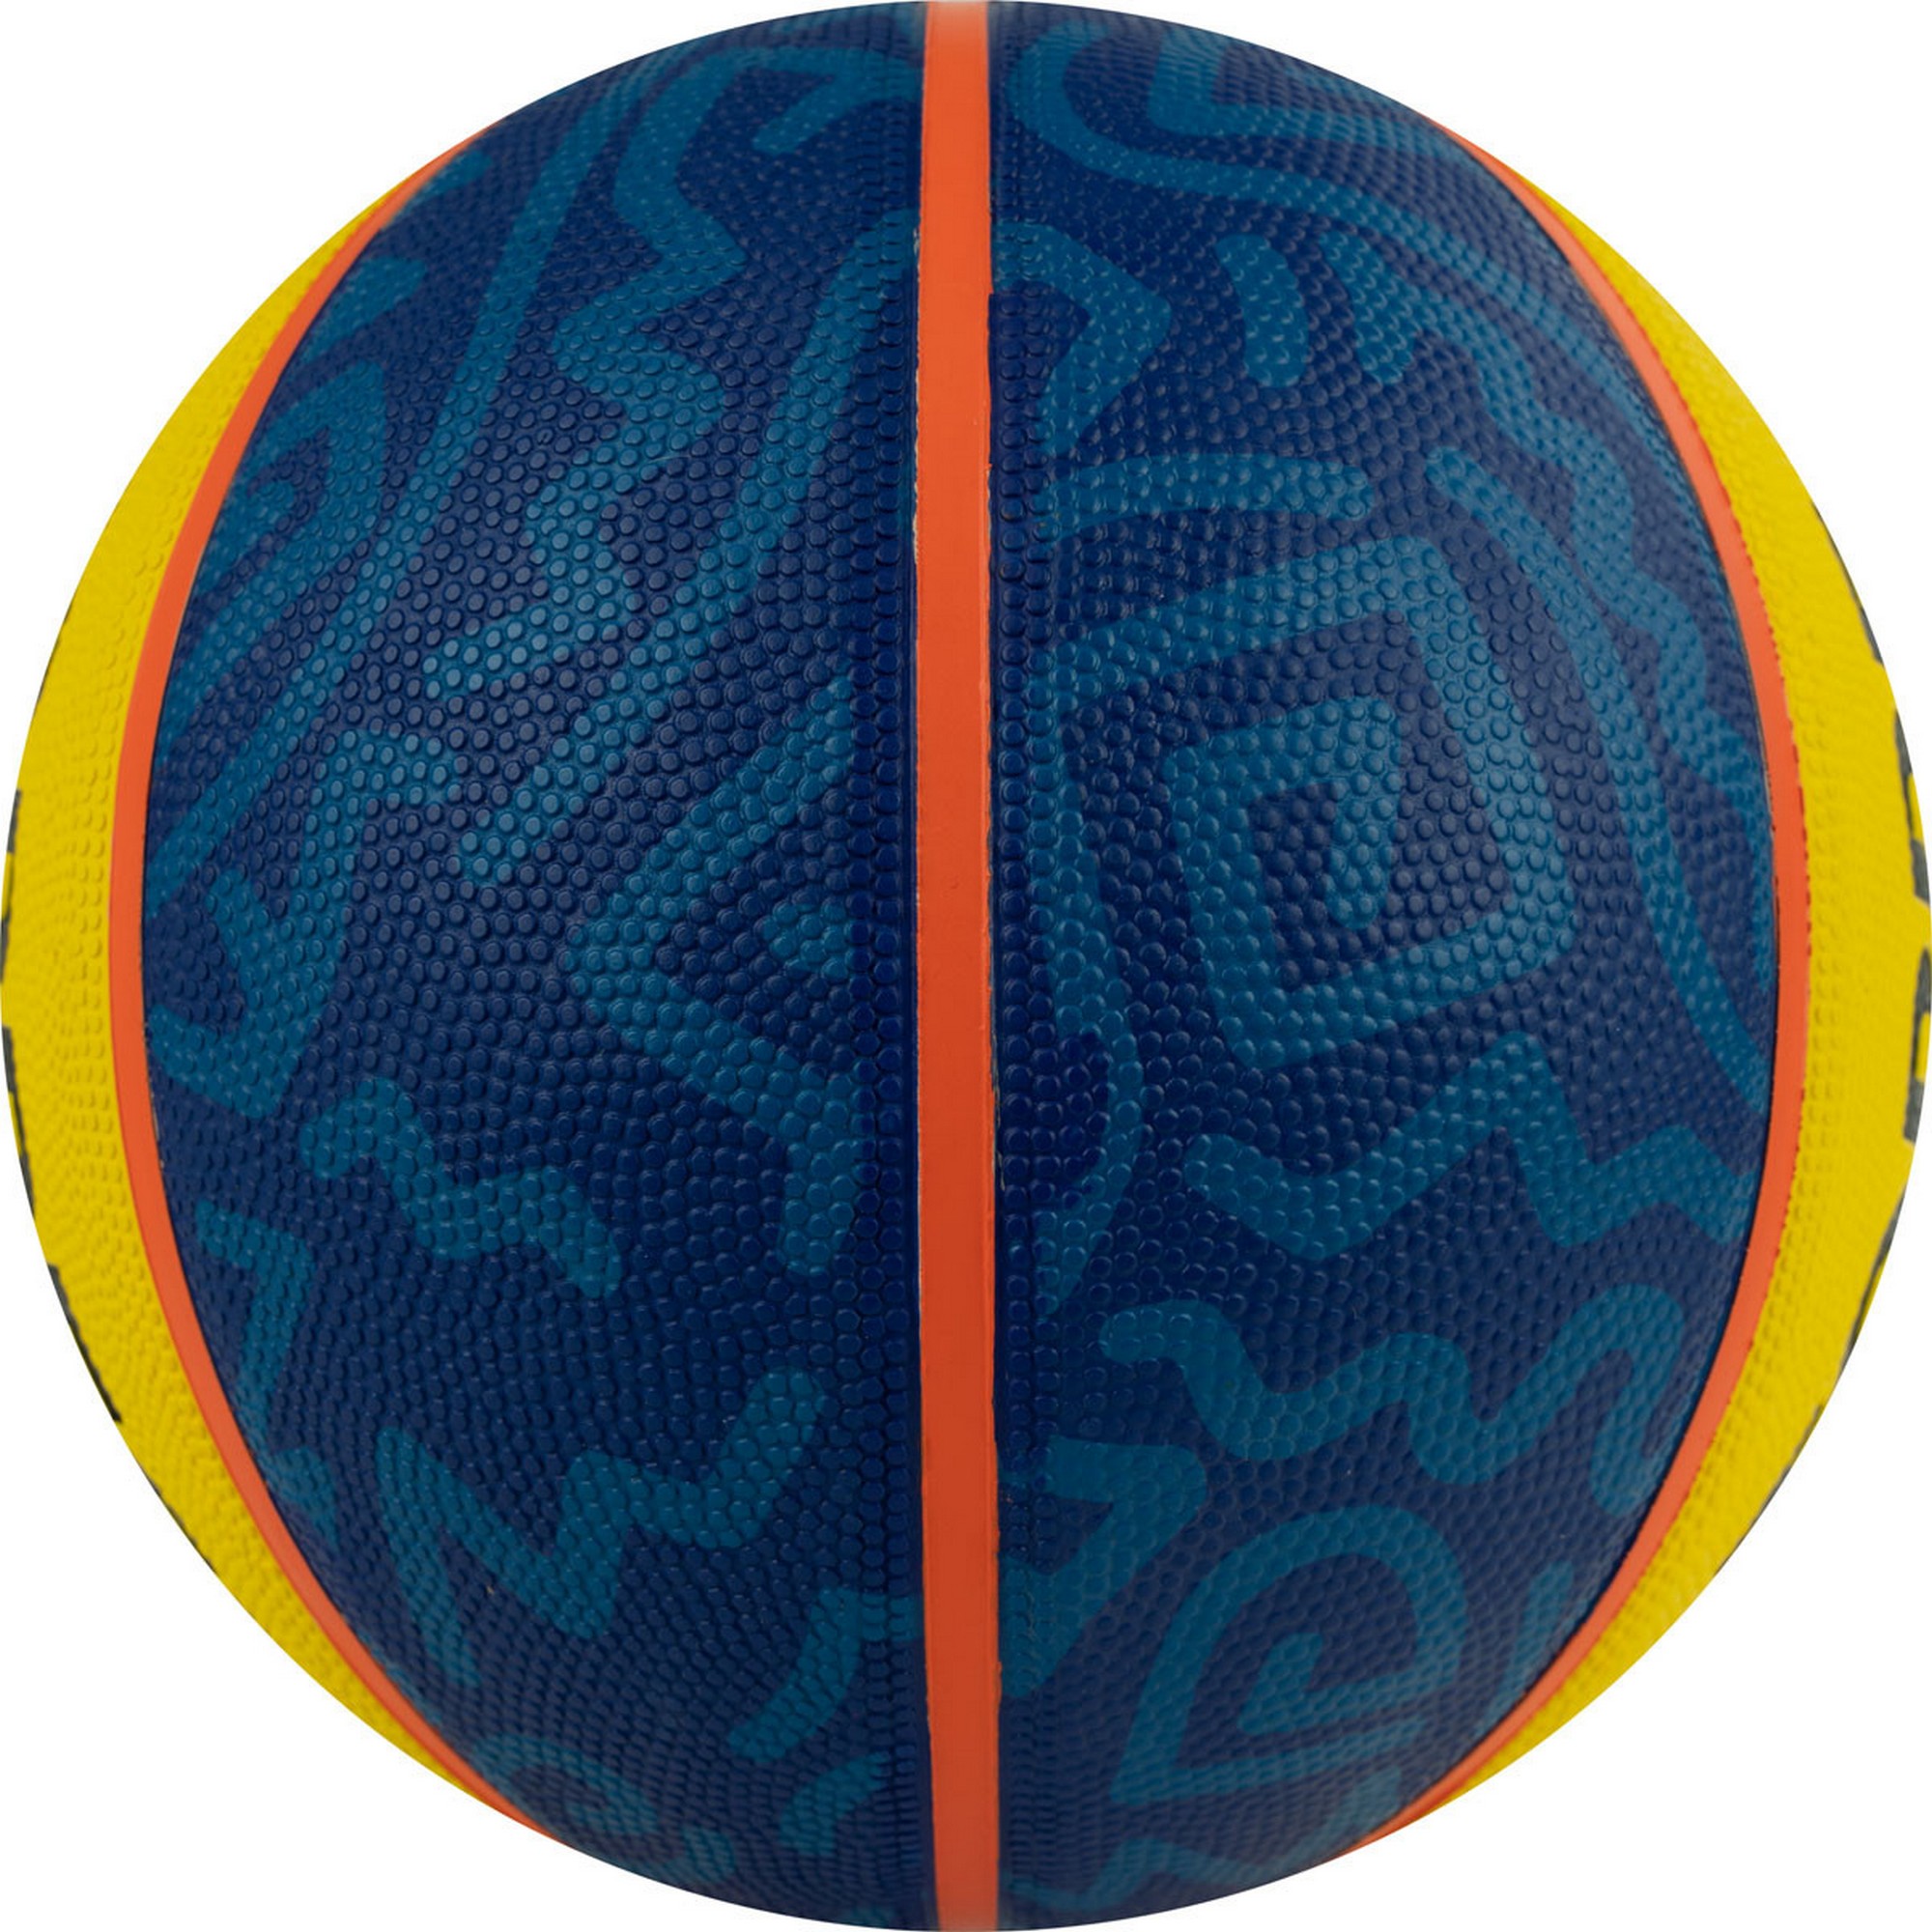 Мяч баскетбольный Torres 3х3 Outdoor B022336 р. 6 2000_2000